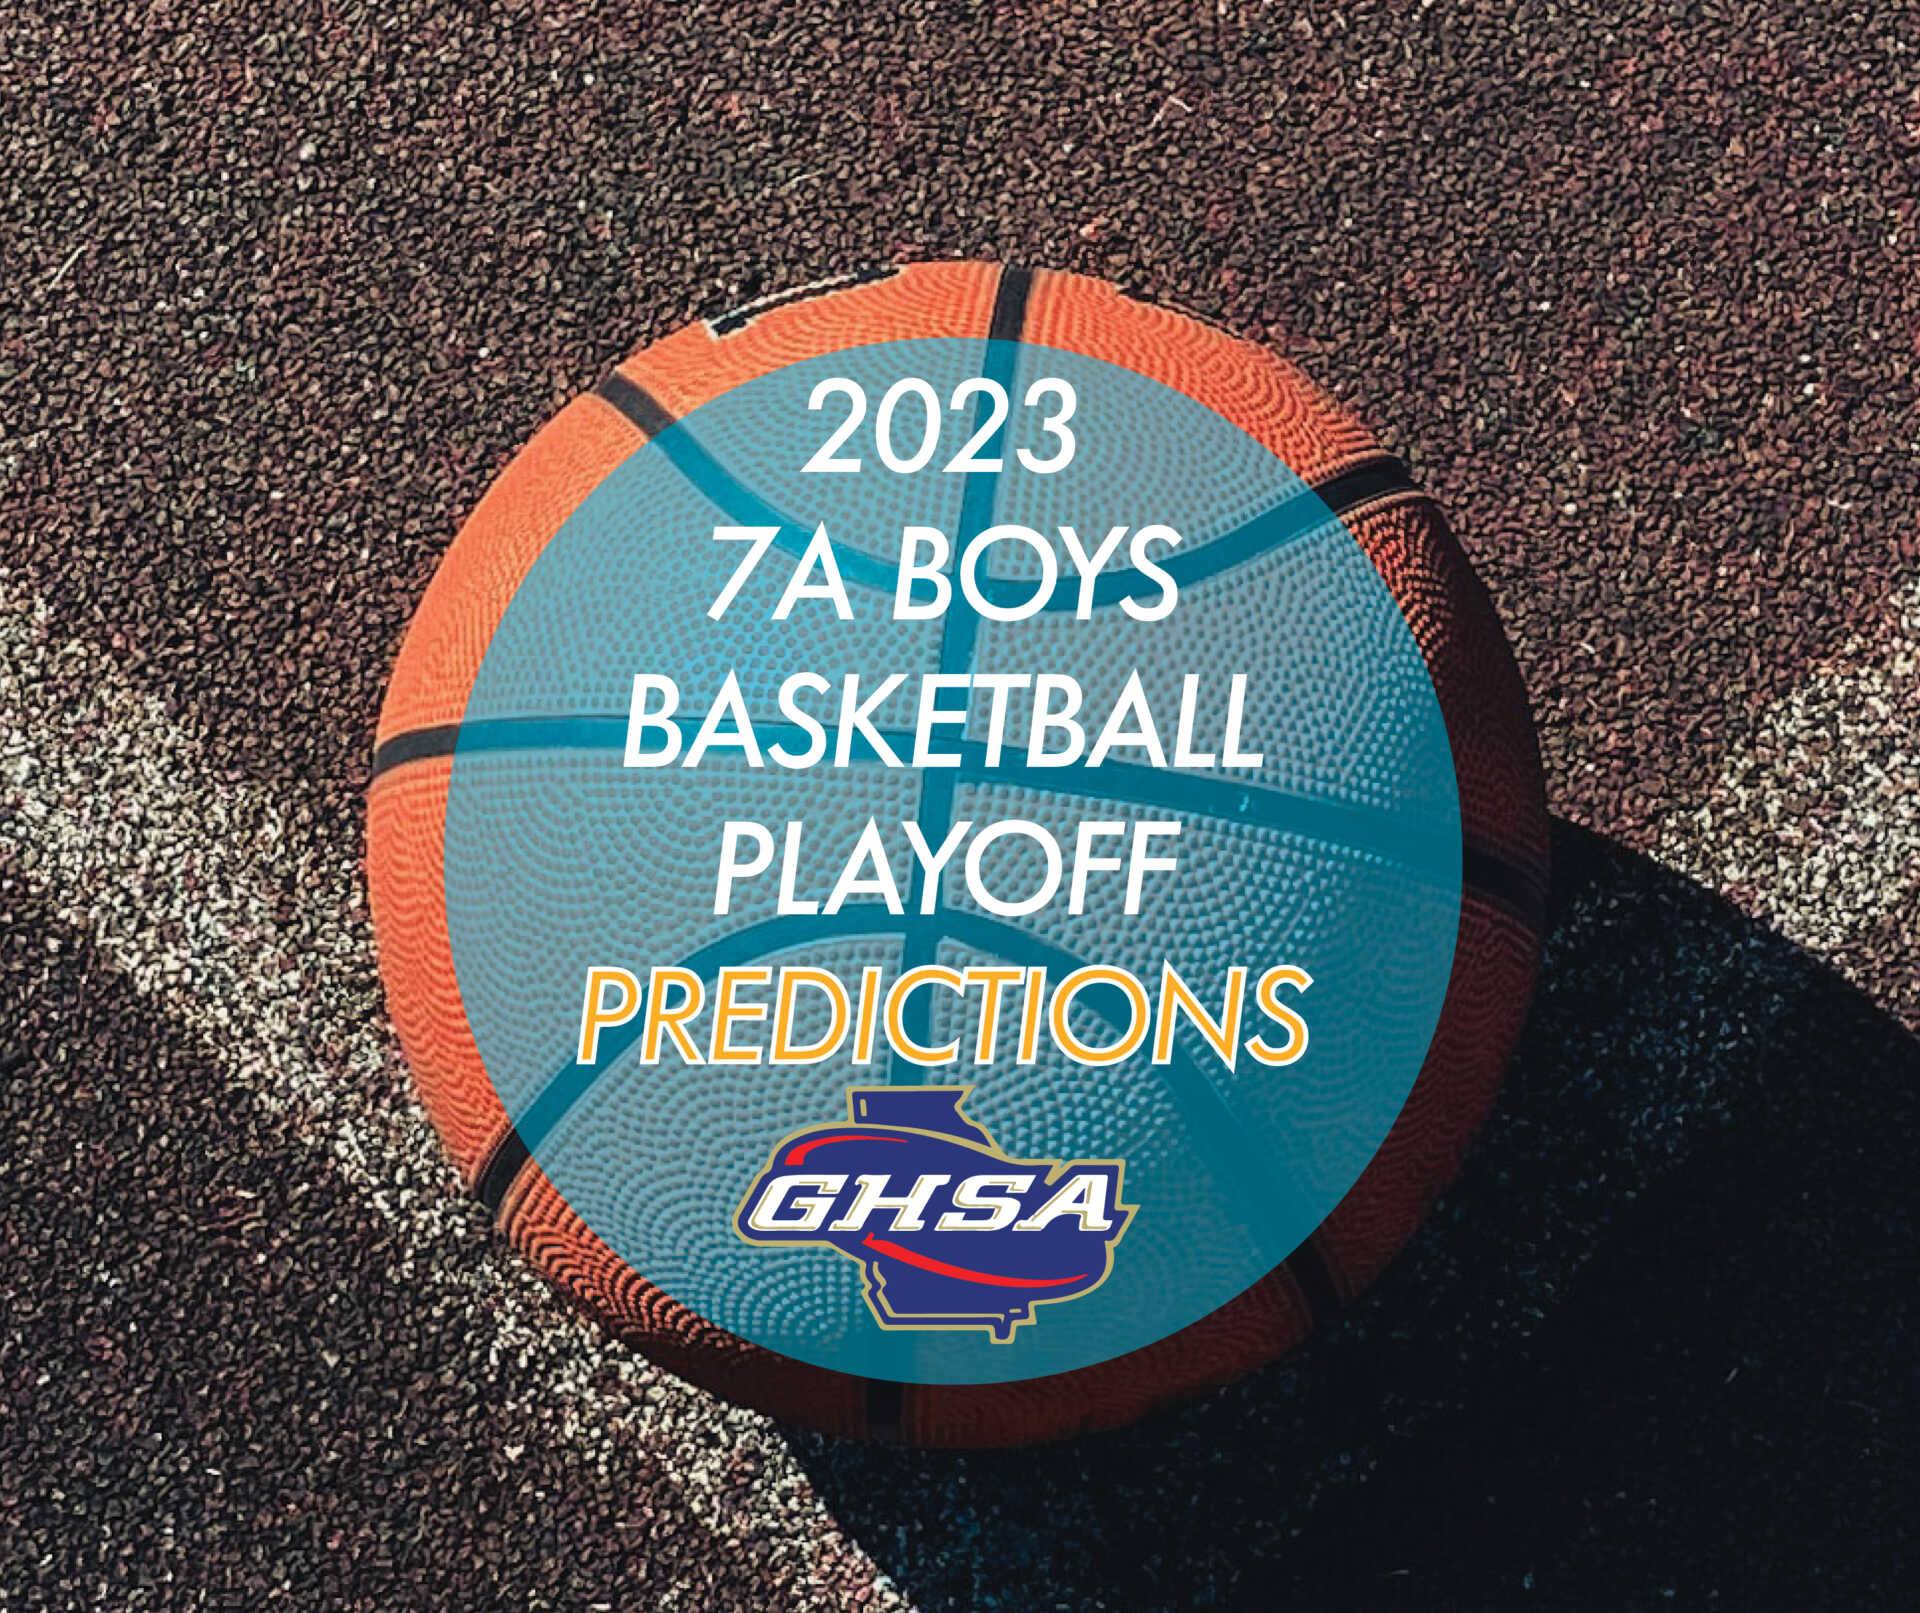 2023 7A Boys Basketball Playoff Predictions Web 1920x1613 